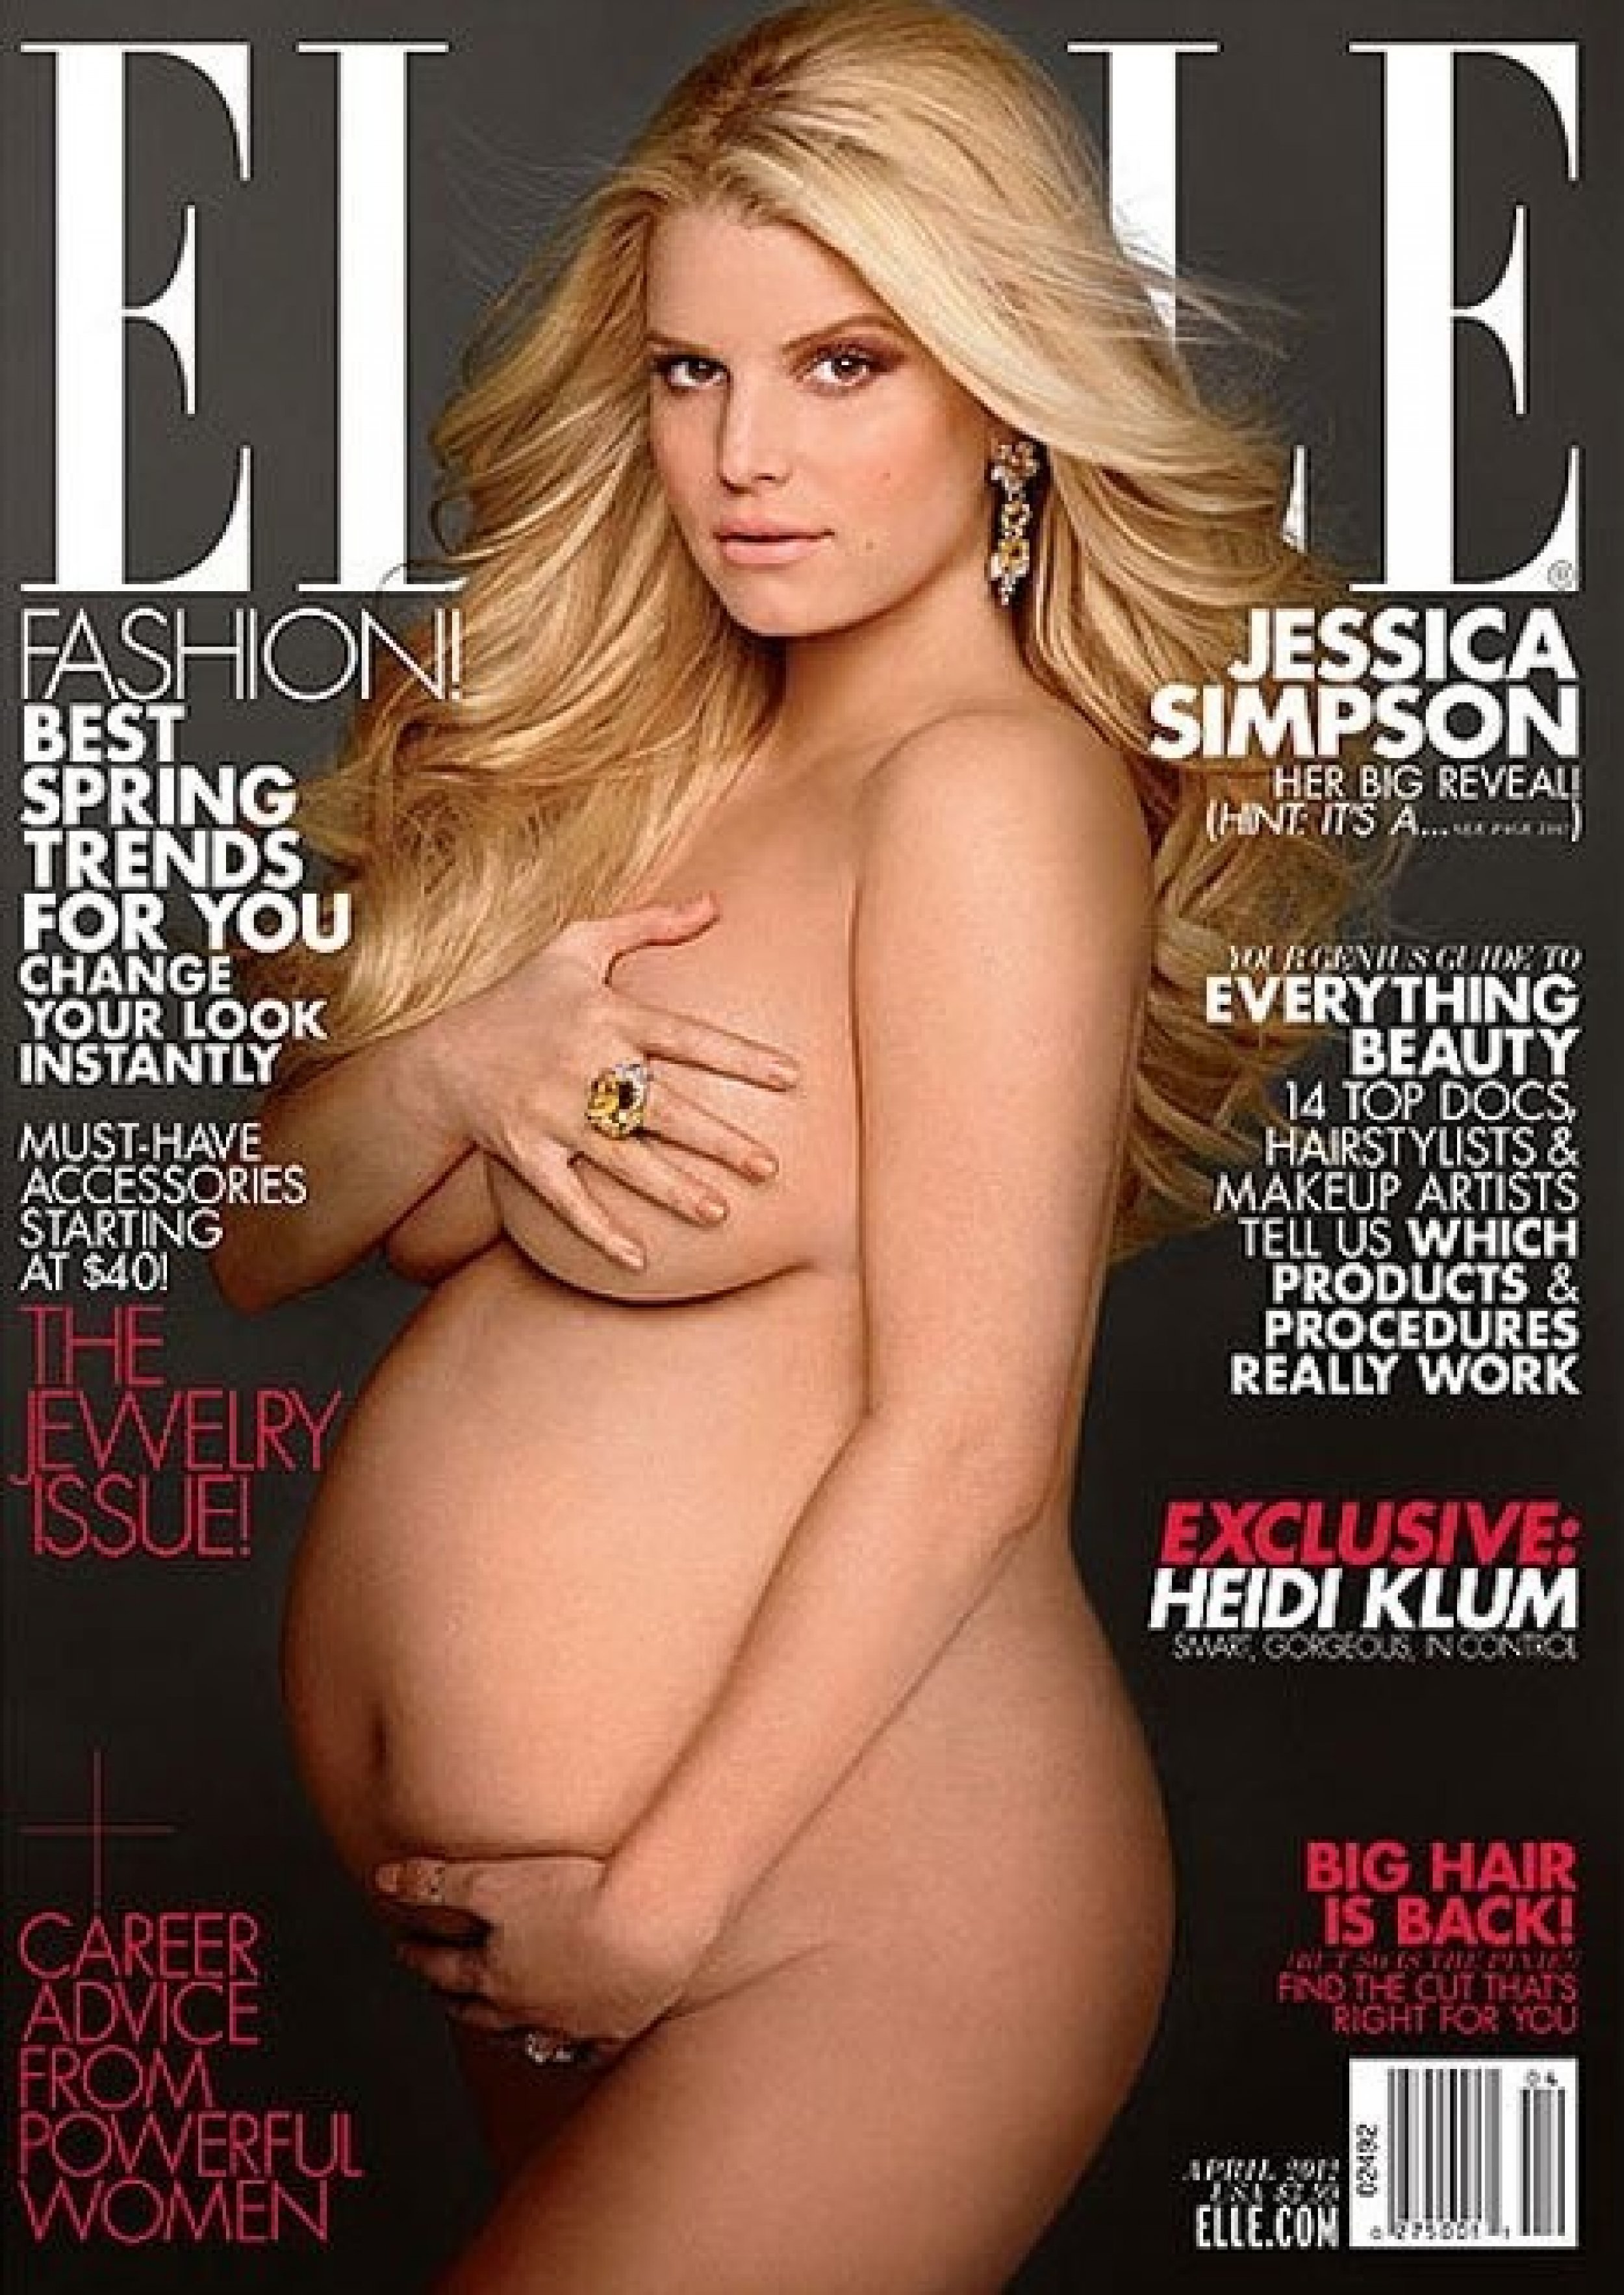 Pregnant Porn Magazine - Jessica Simpson Proud Of Pregnant, Nude Elle Cover: 'I've Never Felt More  Beautiful'